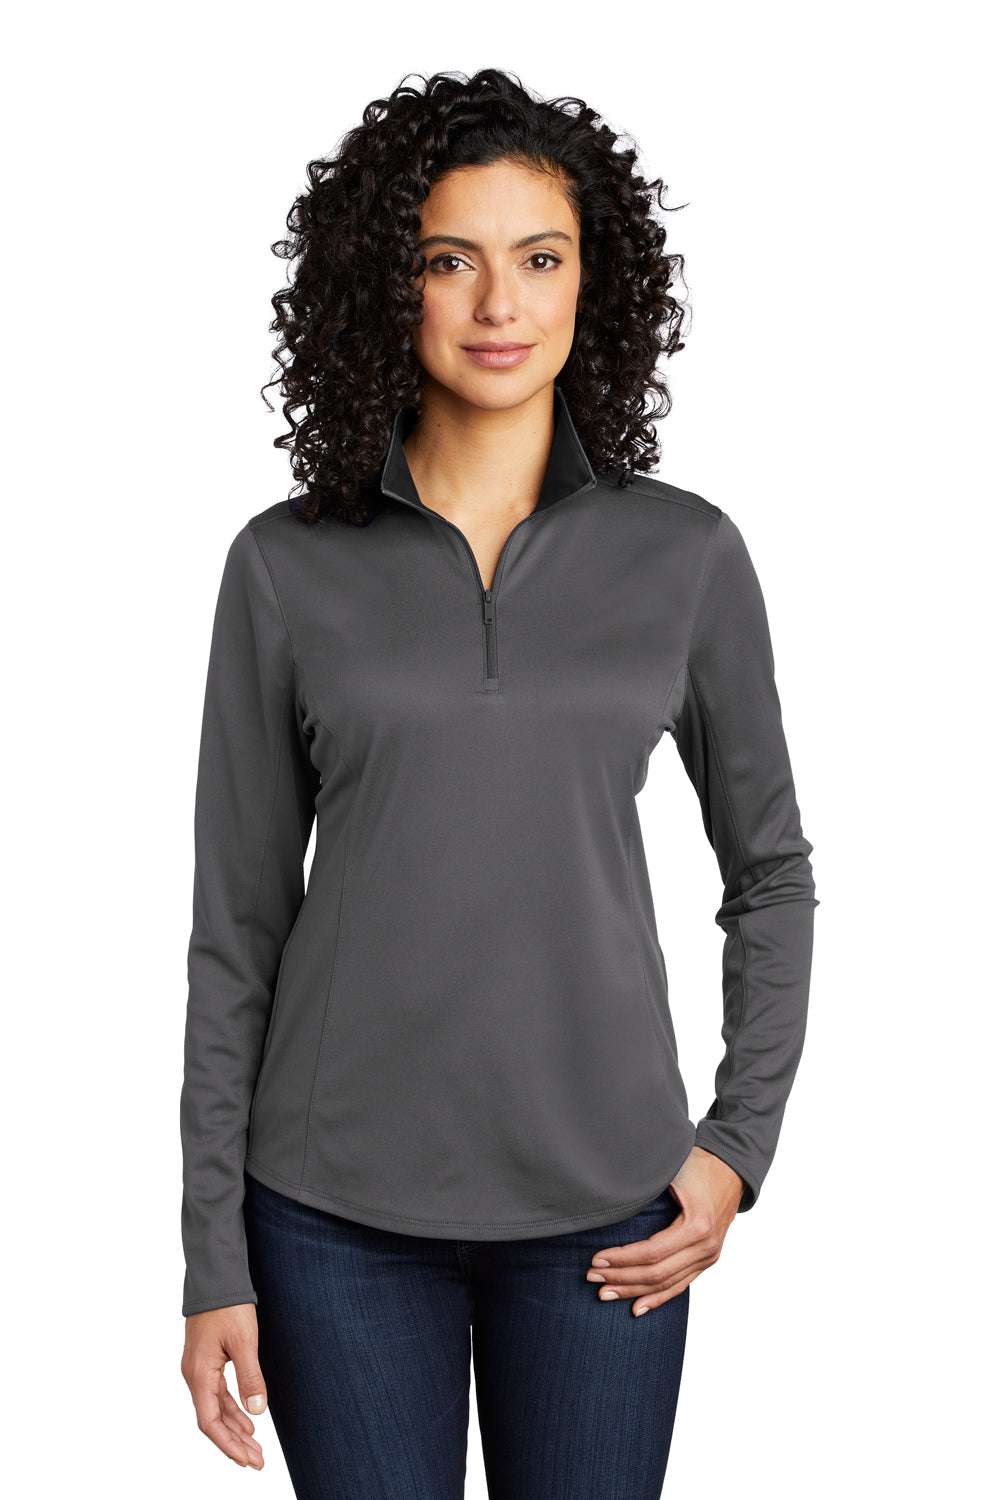 Port Authority Womens Performance Silk Touch 1/4 Zip Sweatshirt Steel Grey/Black Front